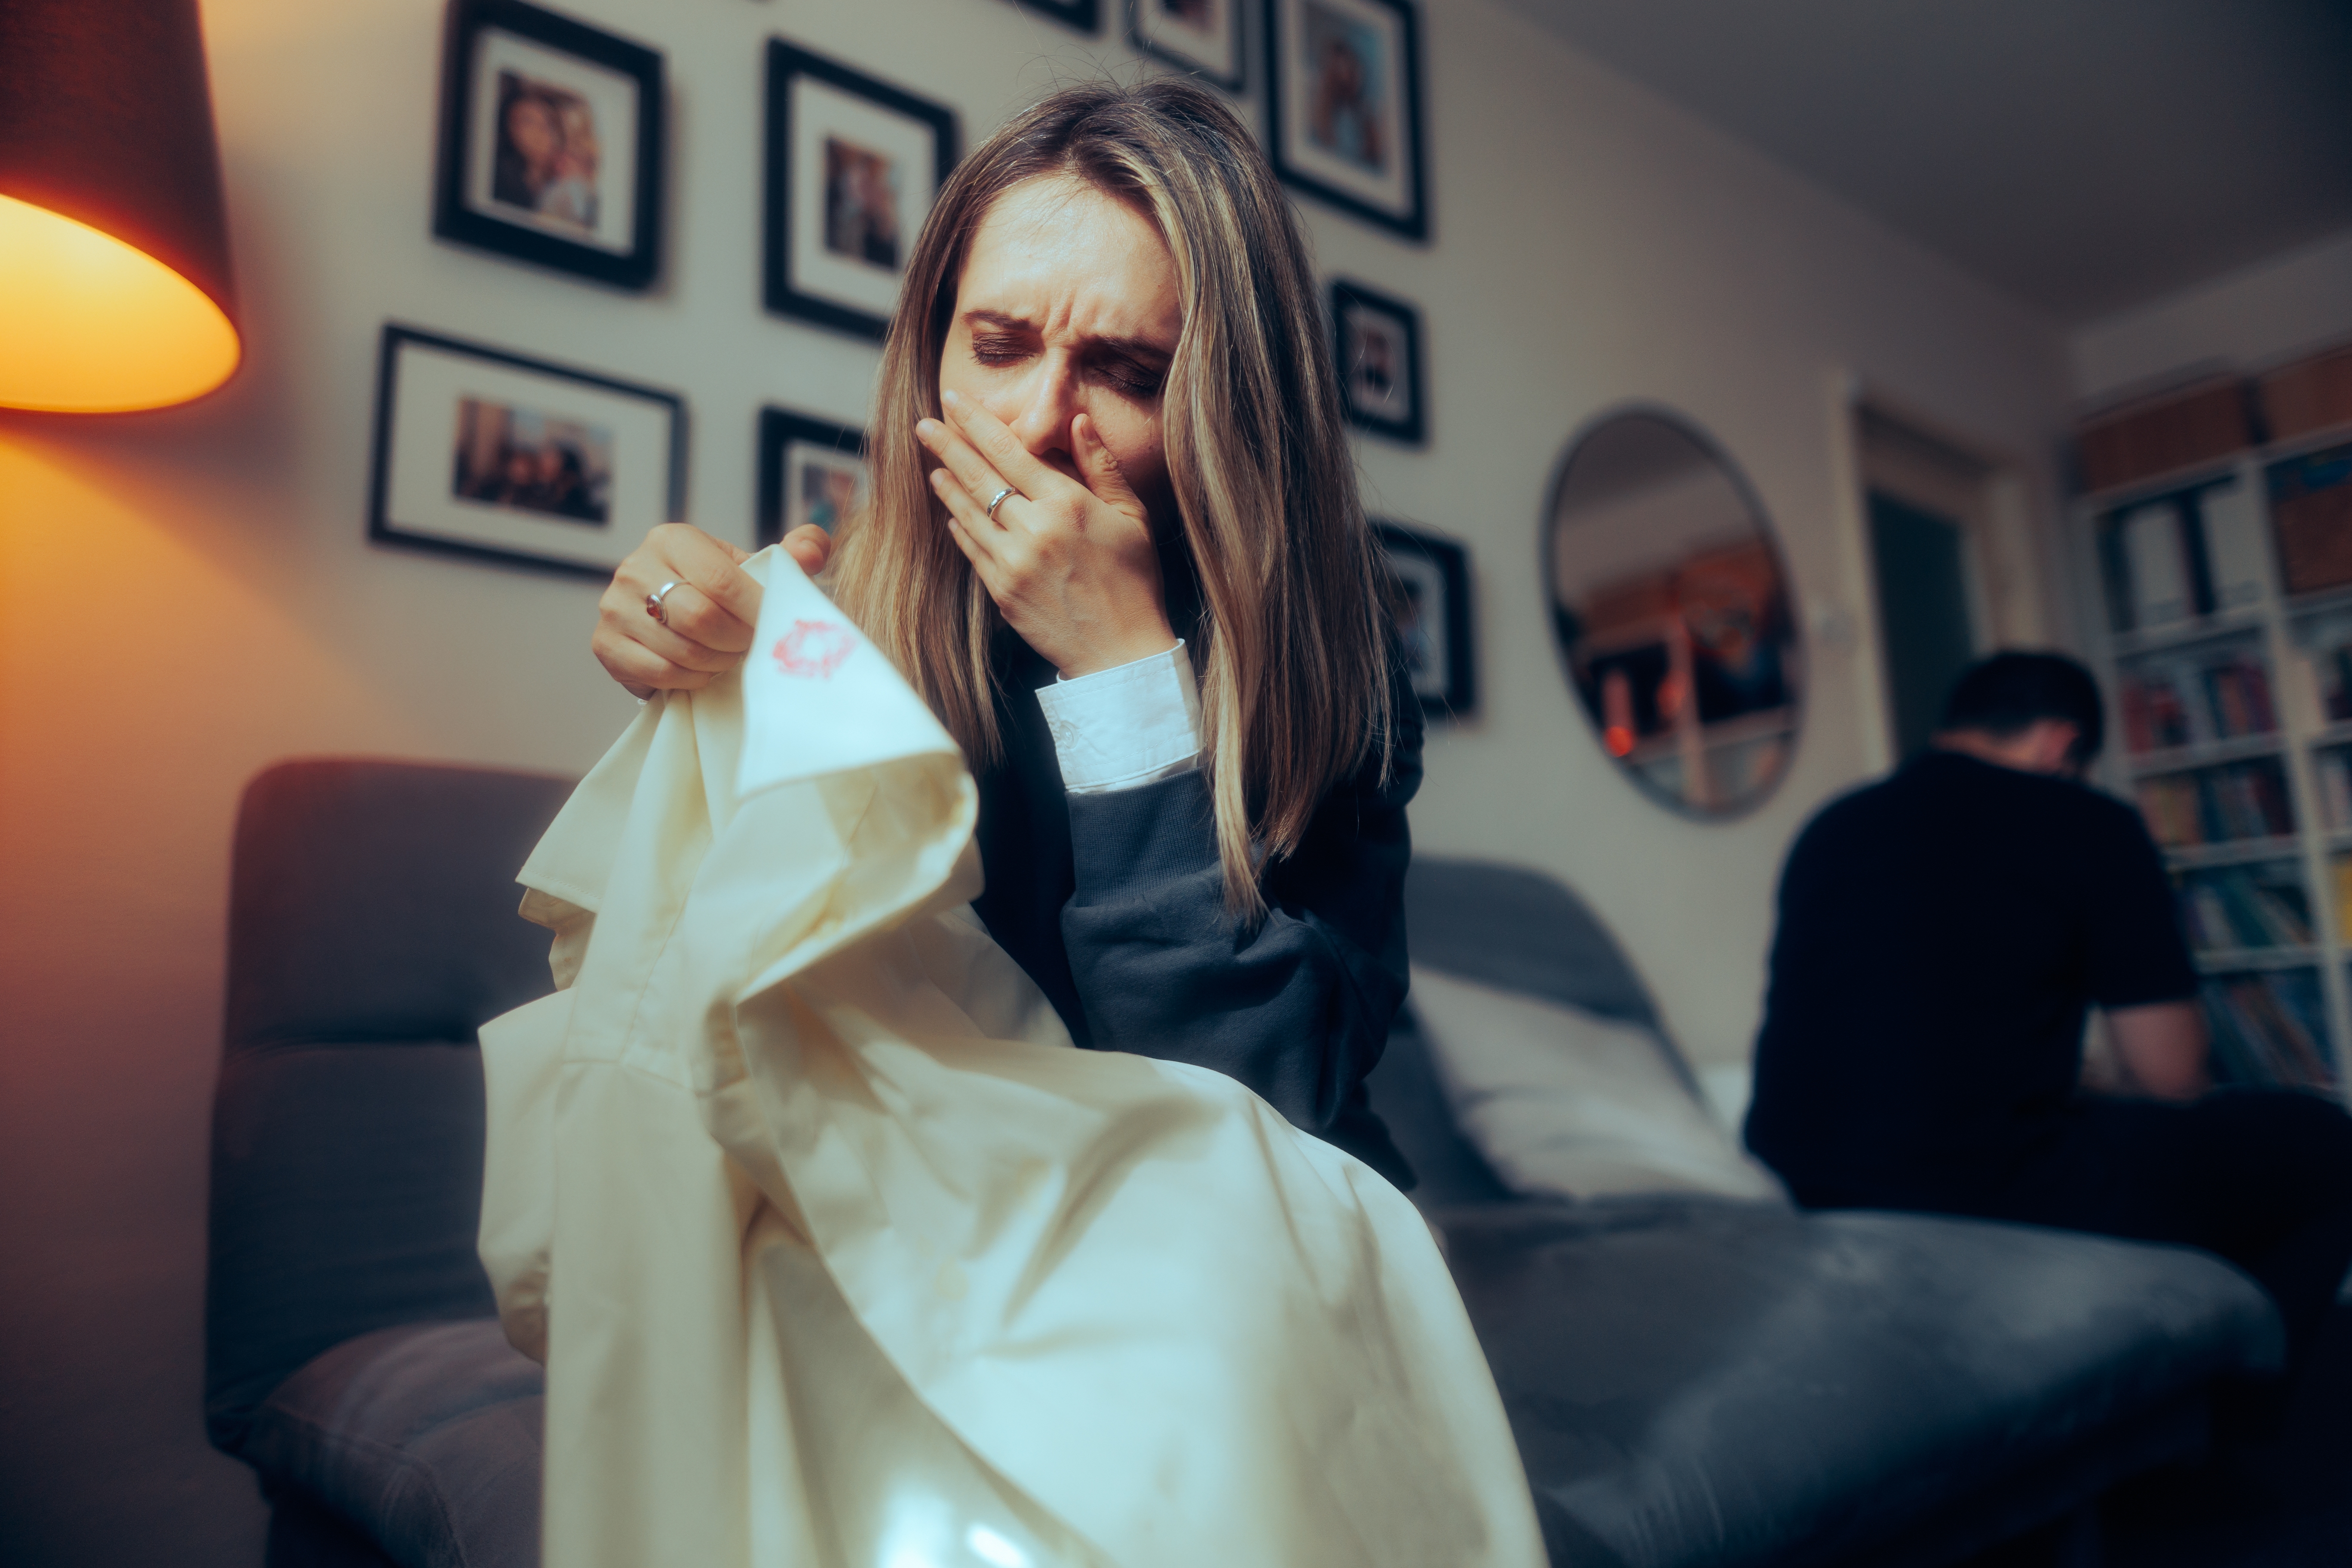 A woman discovers her husband's betrayal | Source: Shutterstock